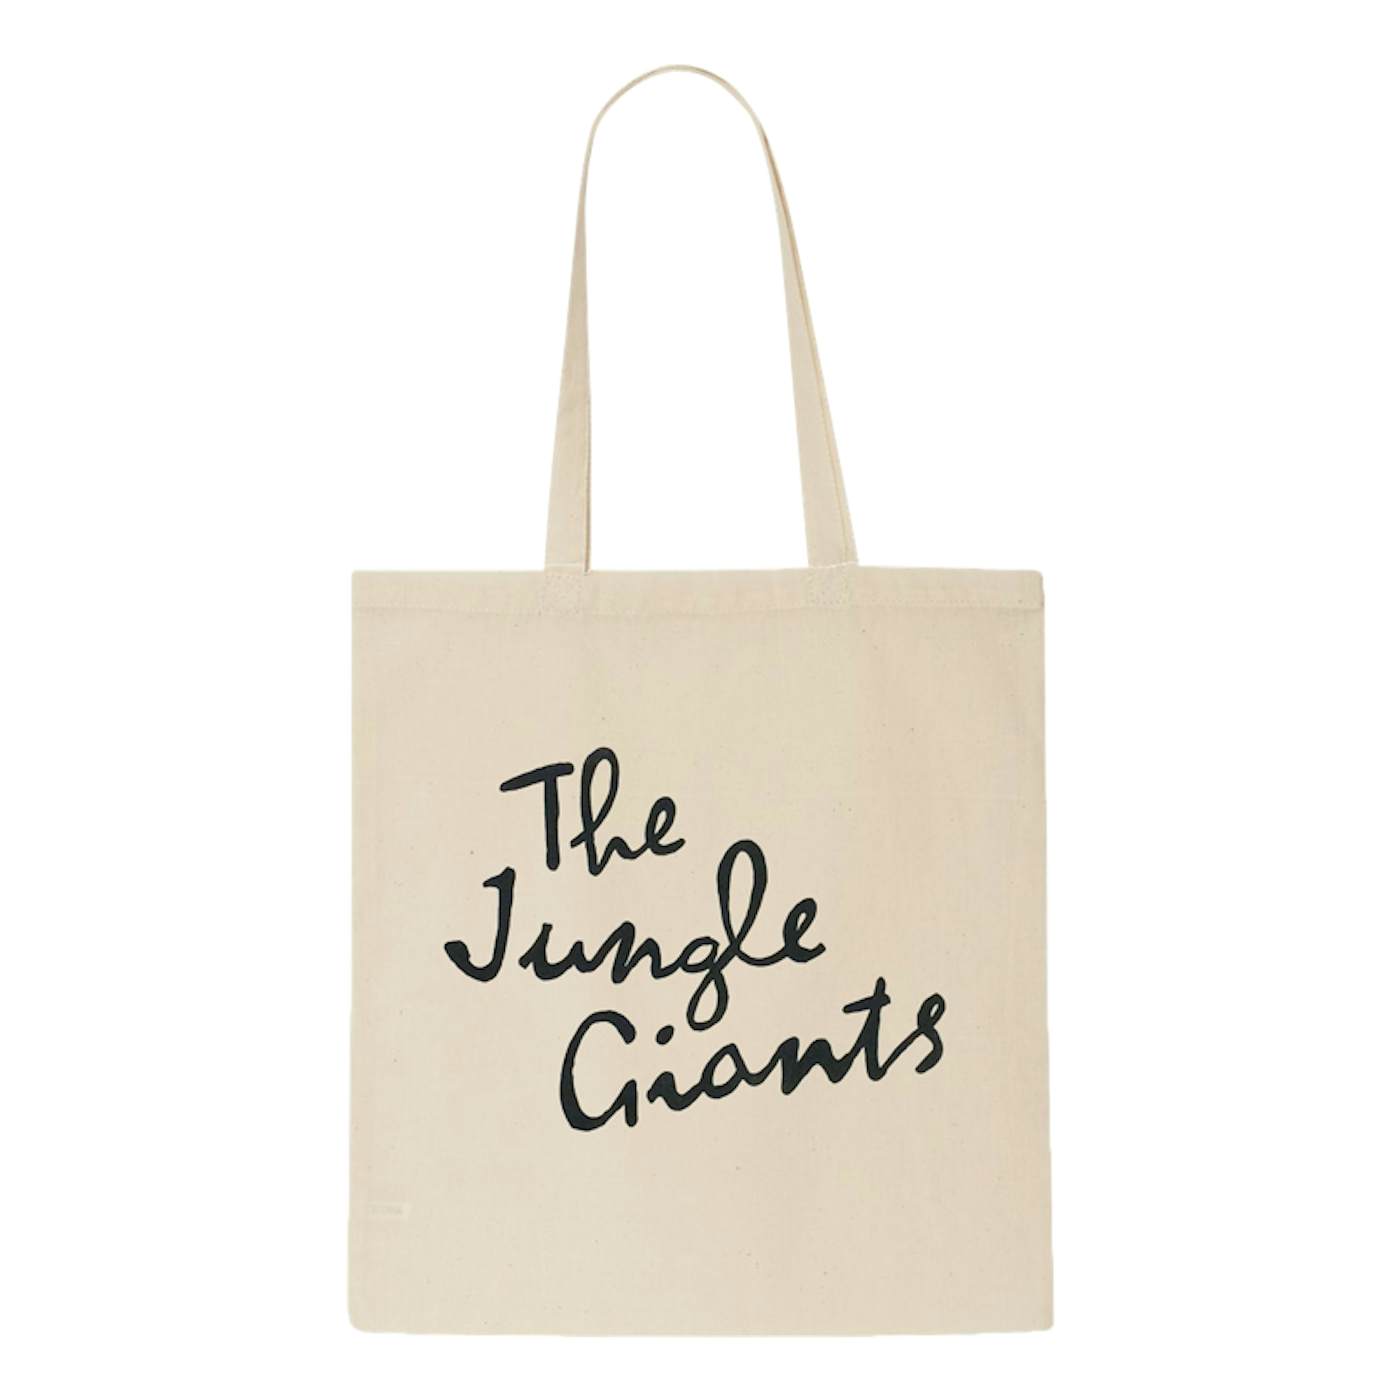 The Jungle Giants - Script Tote Bag